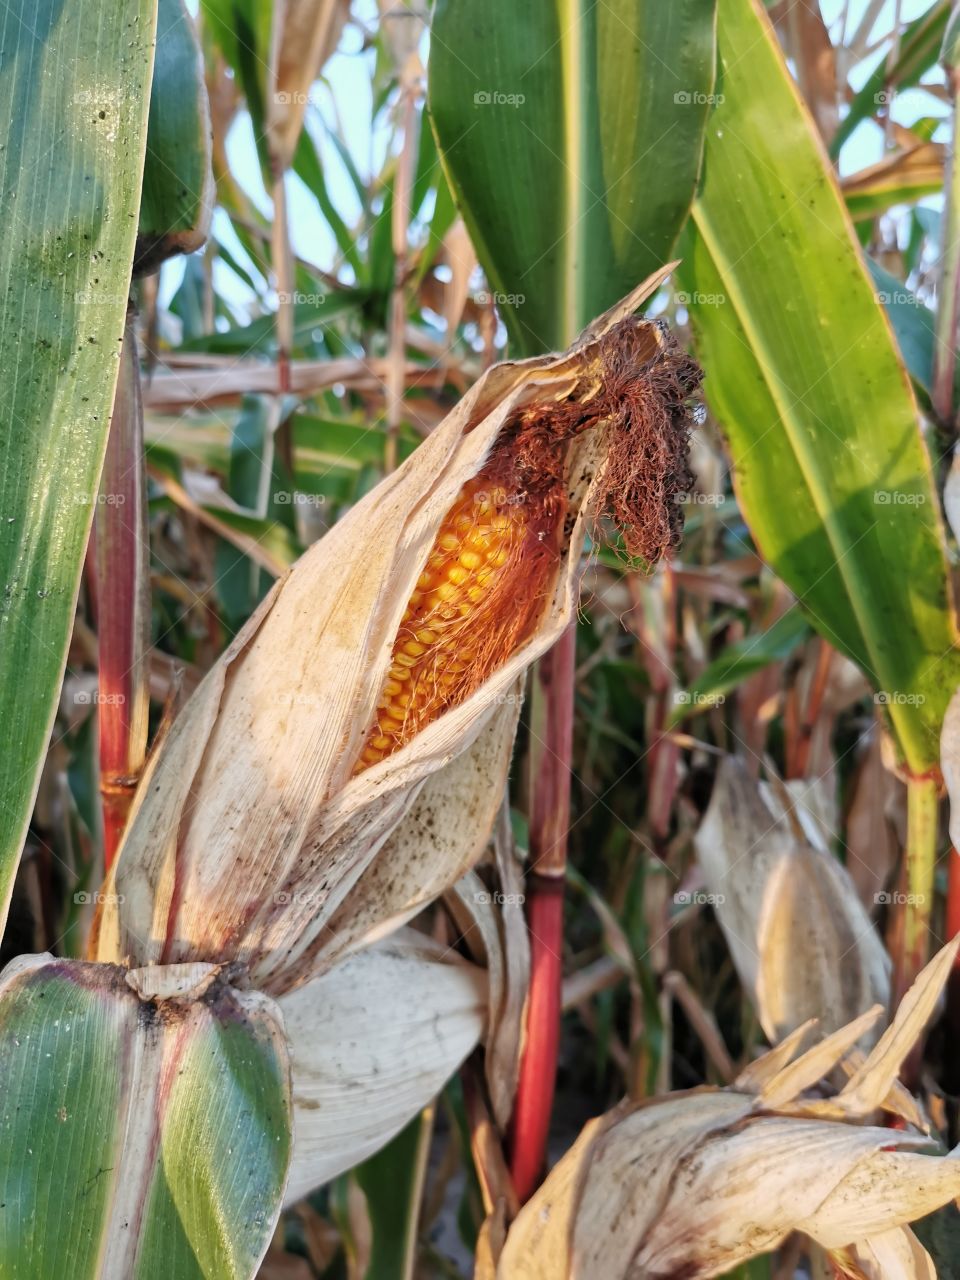 Corn crop in the field